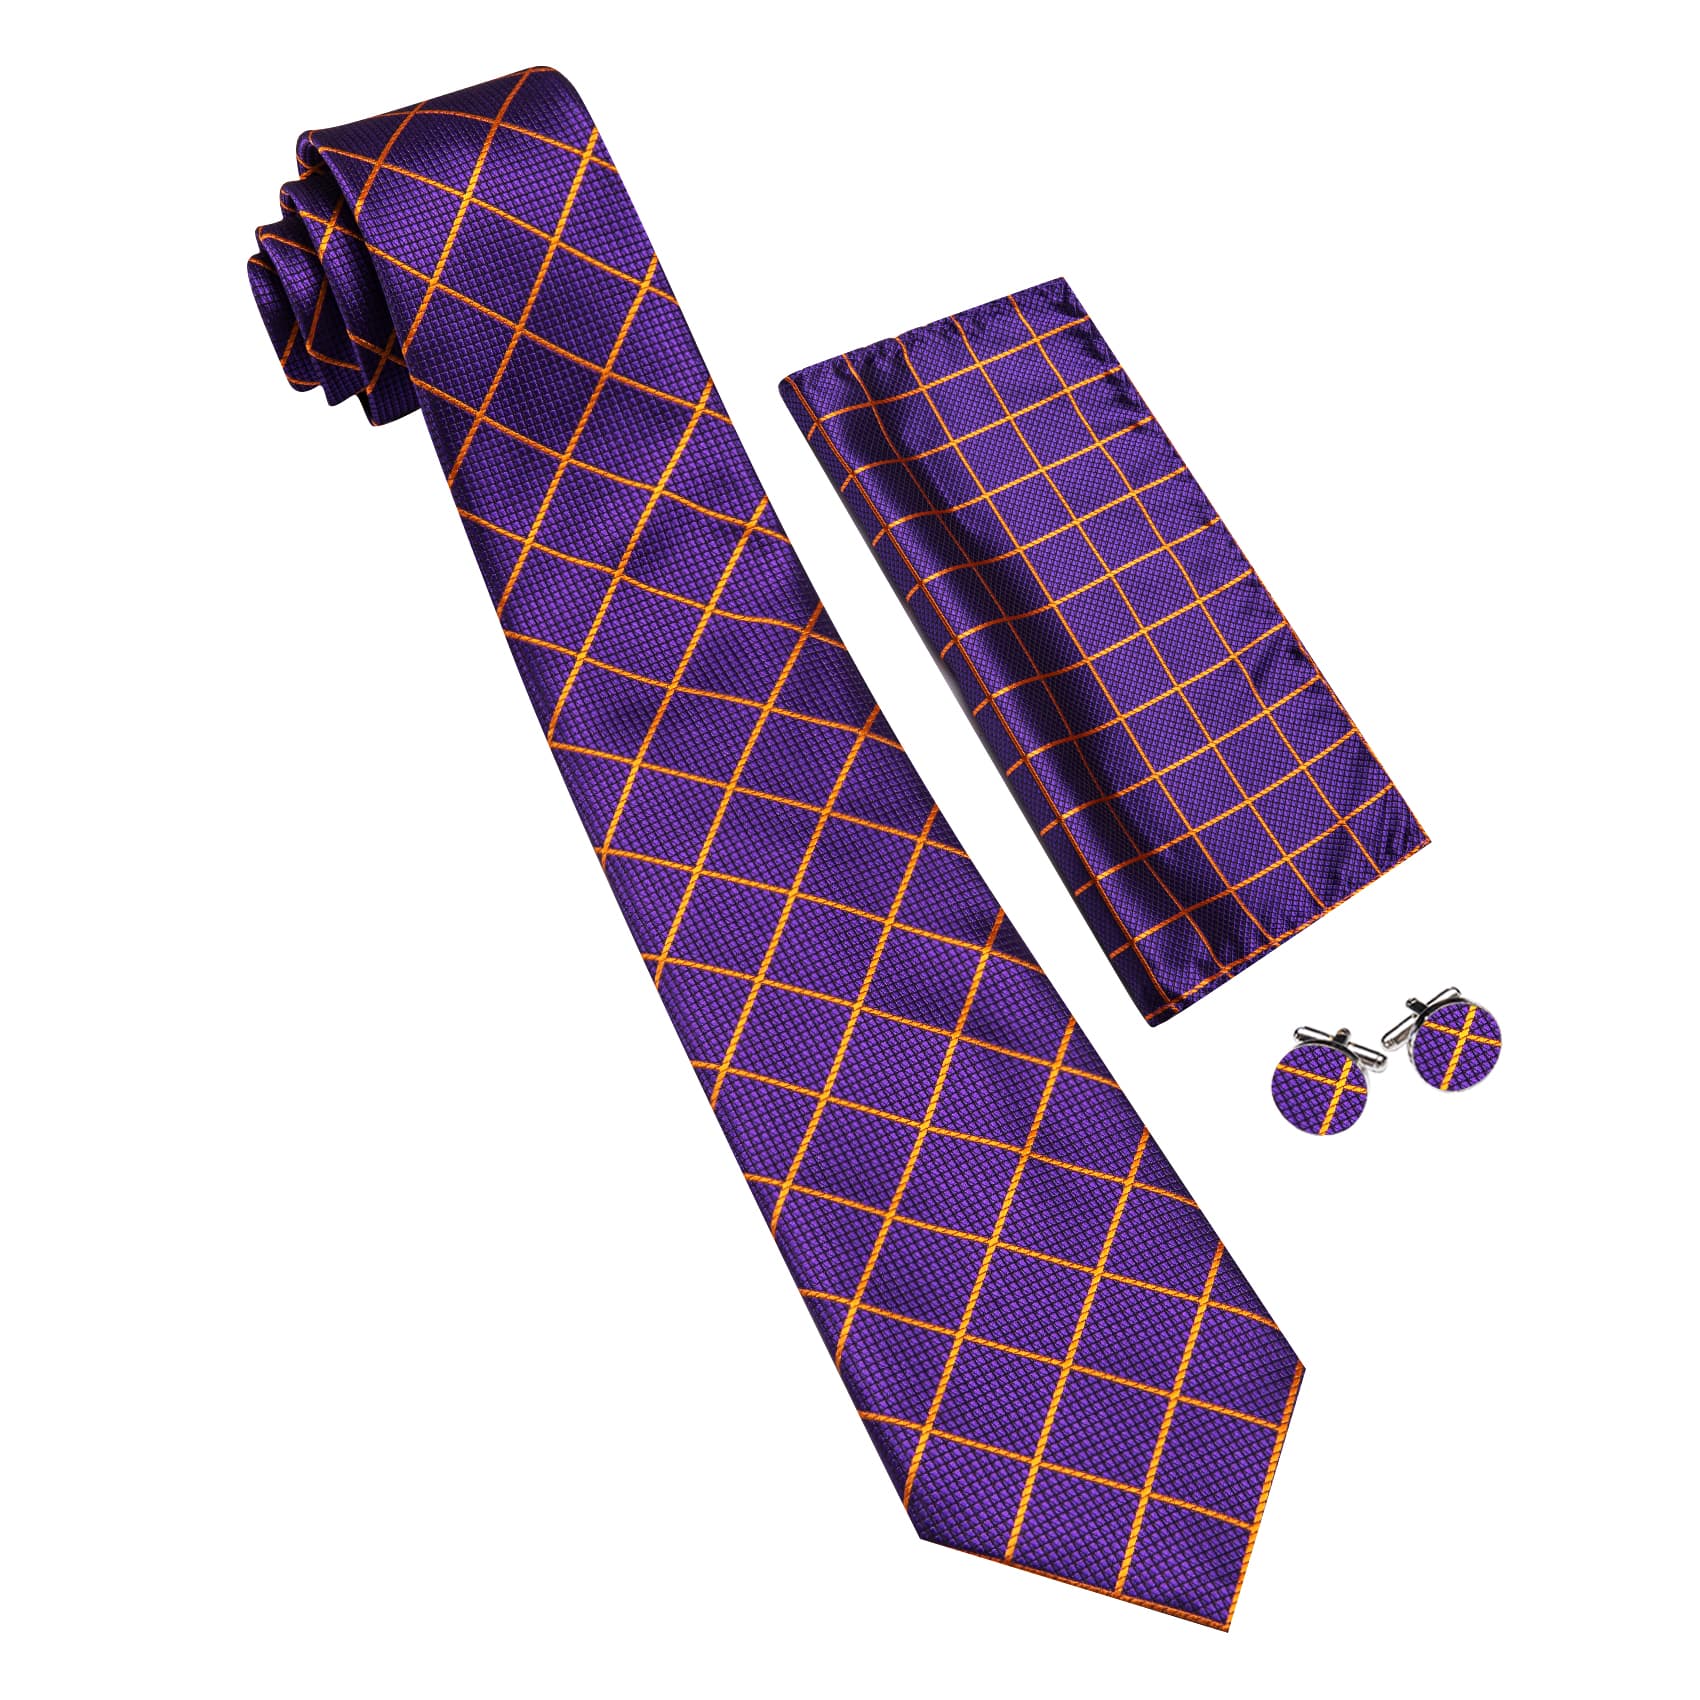  Purple Plaid Tie with Yellow Stripes Men's Business Set